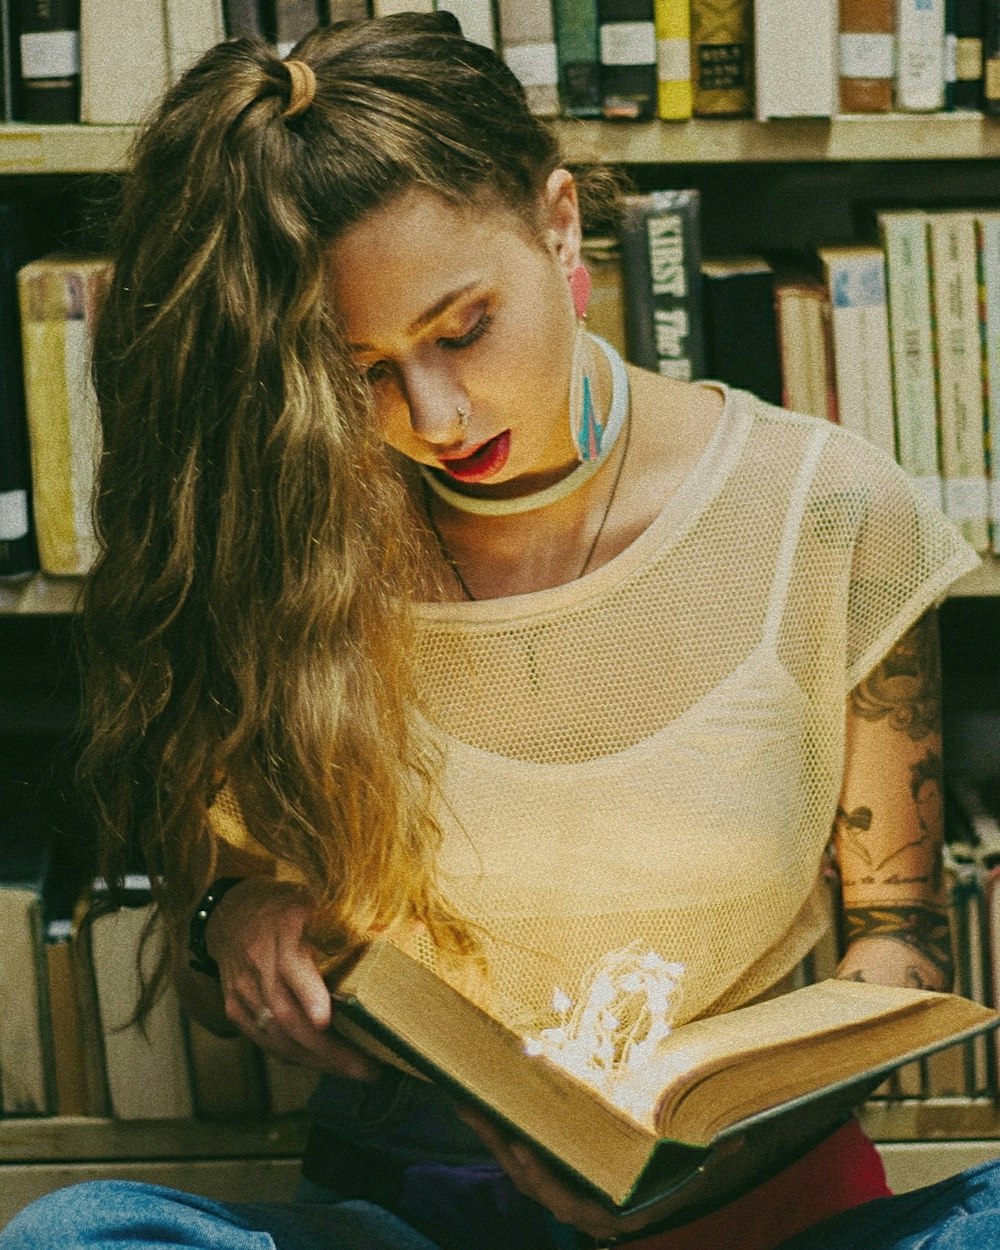 woman wearing white spaghetti strap dress reading book inside library